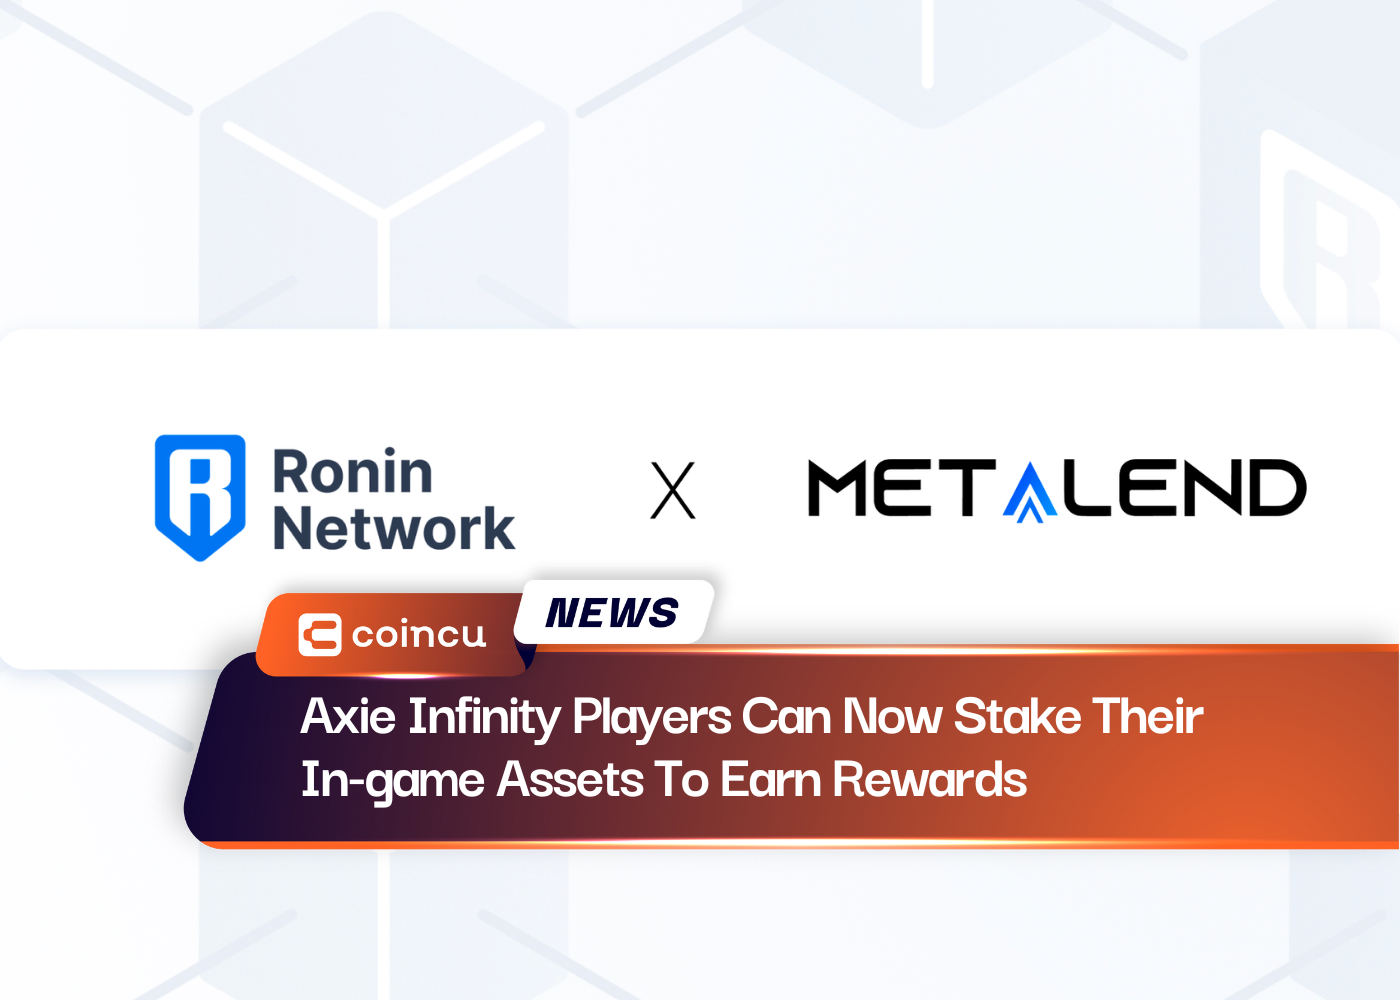 Axie Infinity 玩家现在可以抵押他们的游戏内资产来赚取奖励